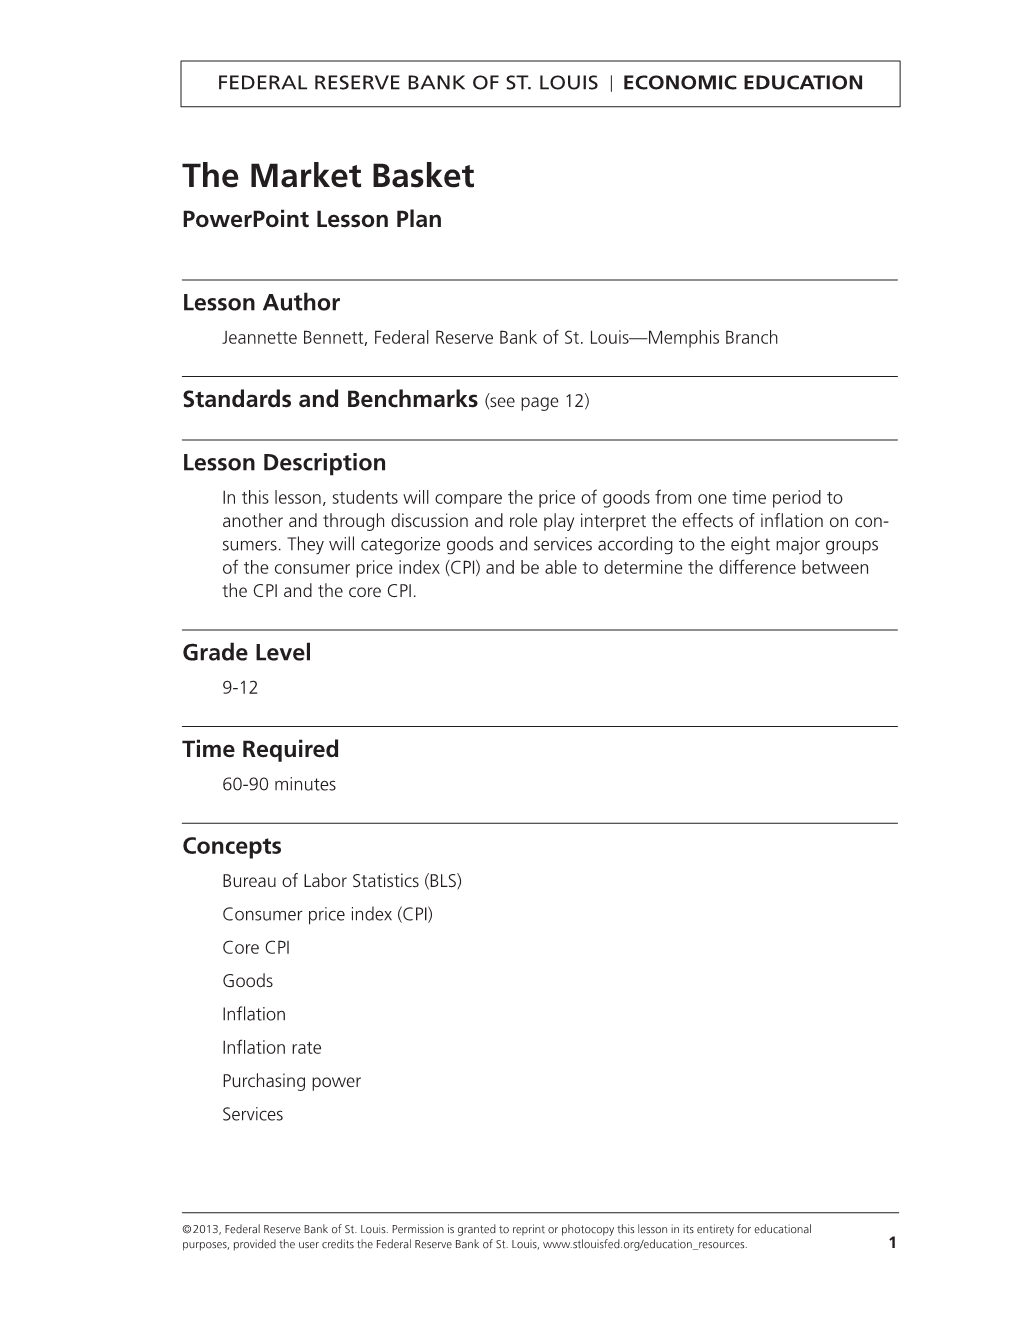 The Market Basket Powerpoint Lesson Plan